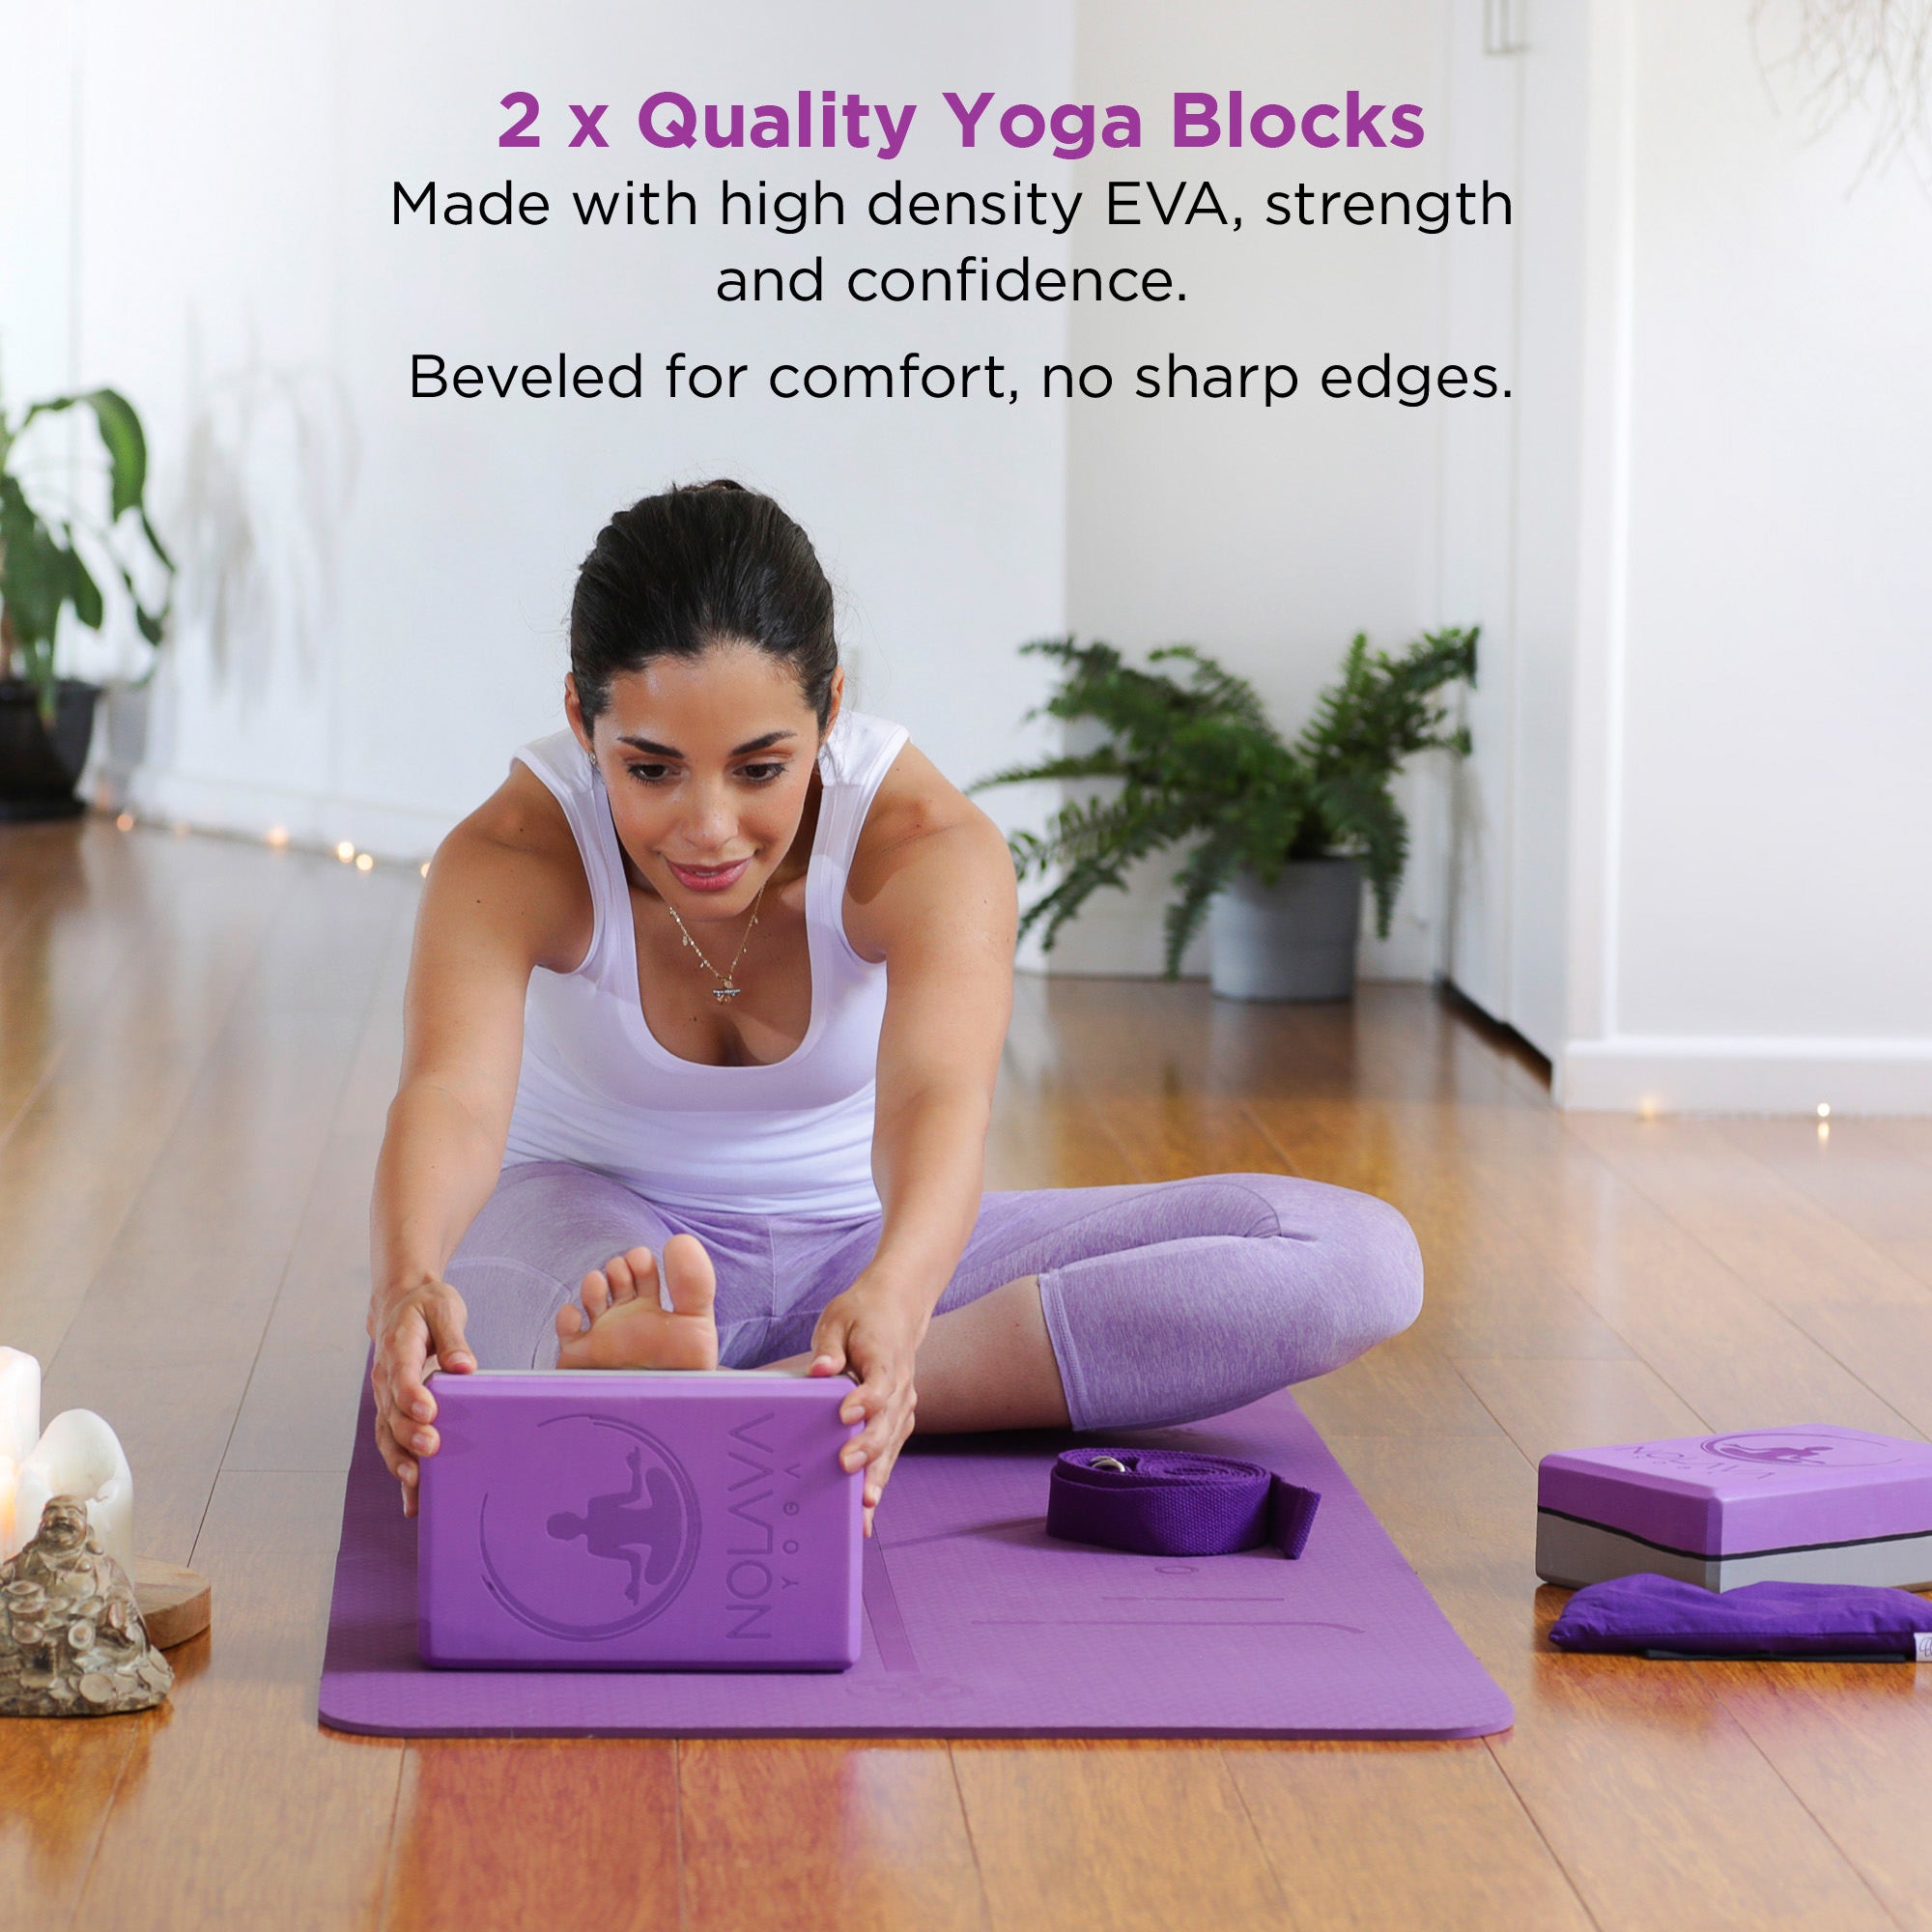 Yoga Set Starter Edition (yoga mat + yoga bag